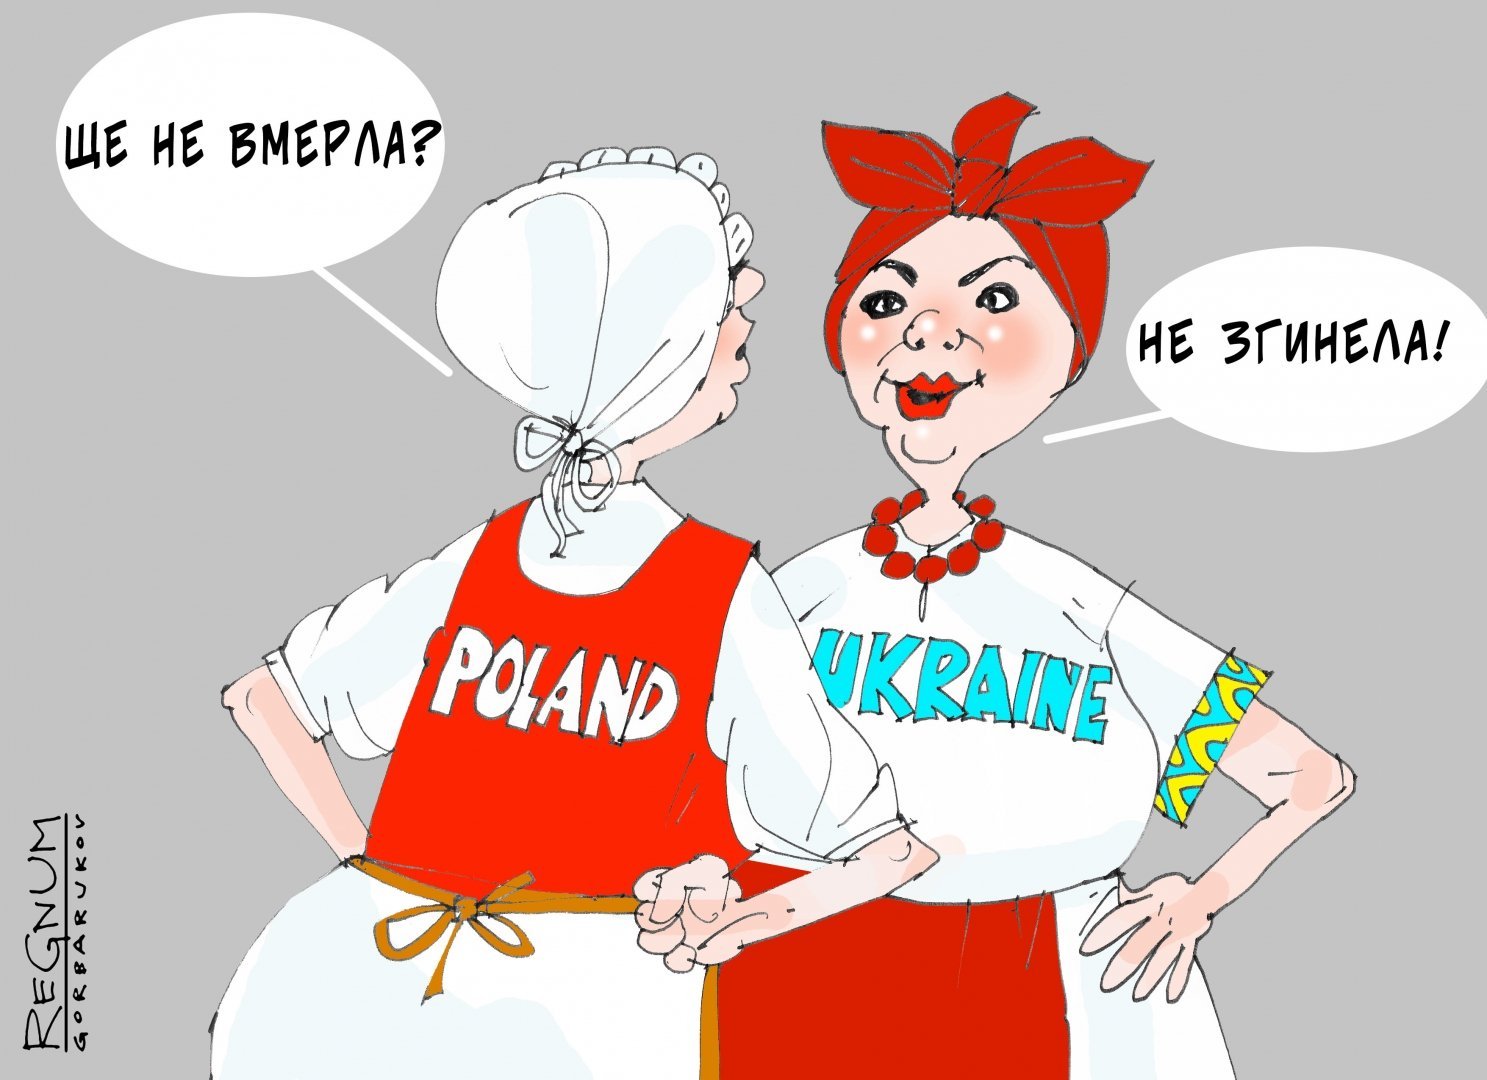 Пан украина. Поляки карикатура. Польша Украина карикатура. Поляки и украинцы карикатура. Польские карикатуры на украинцев.